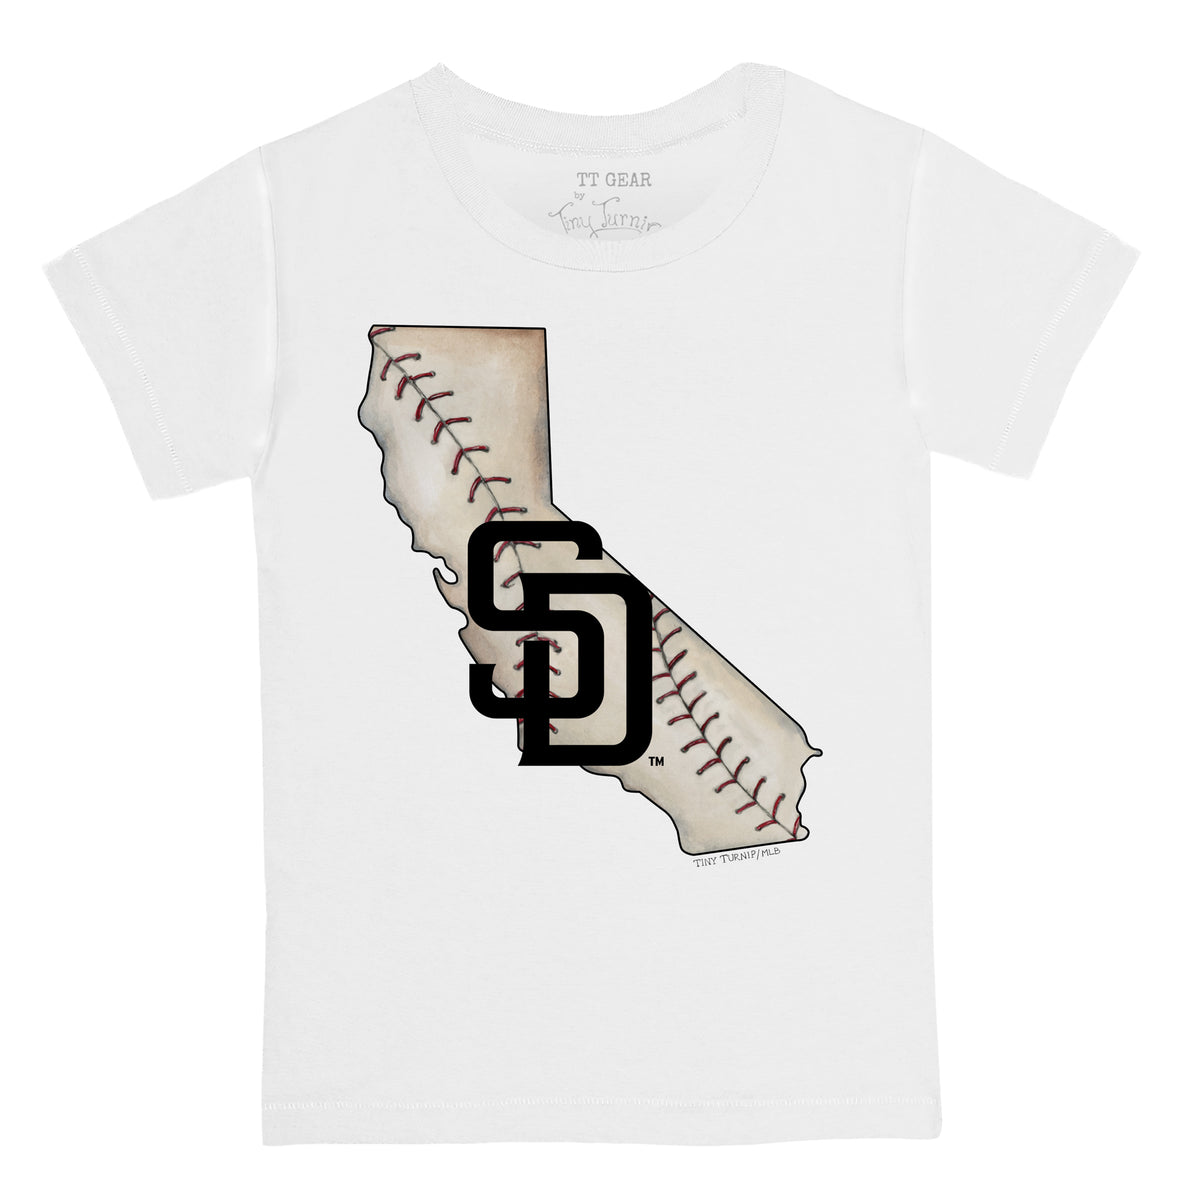 Lids San Diego Padres Tiny Turnip Women's Heart Bat T-Shirt